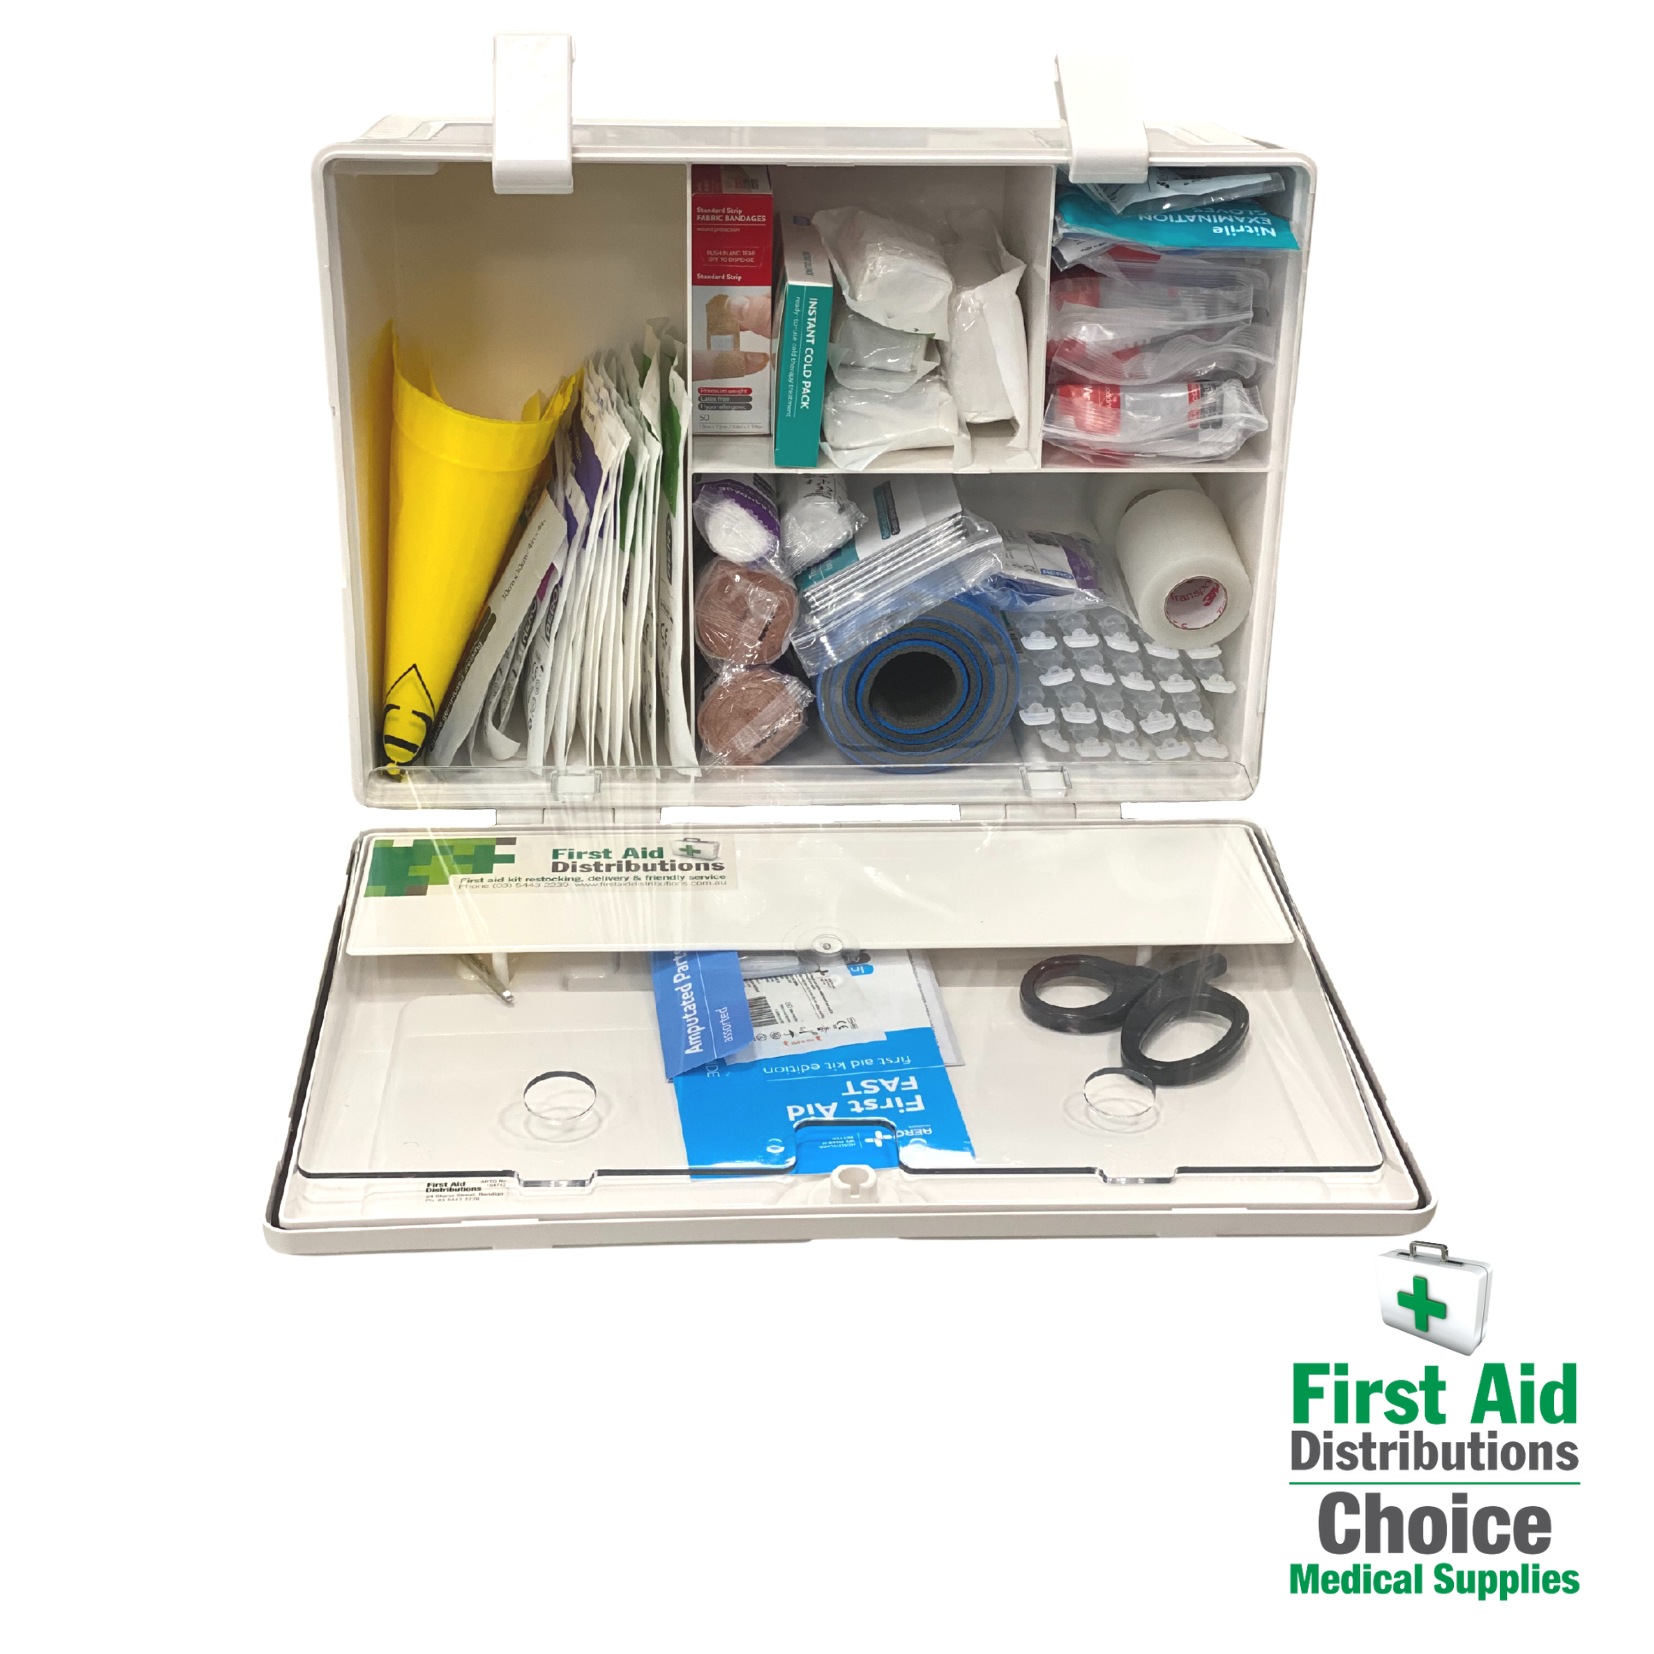 First aid kits - Marine | First Aid Distributions